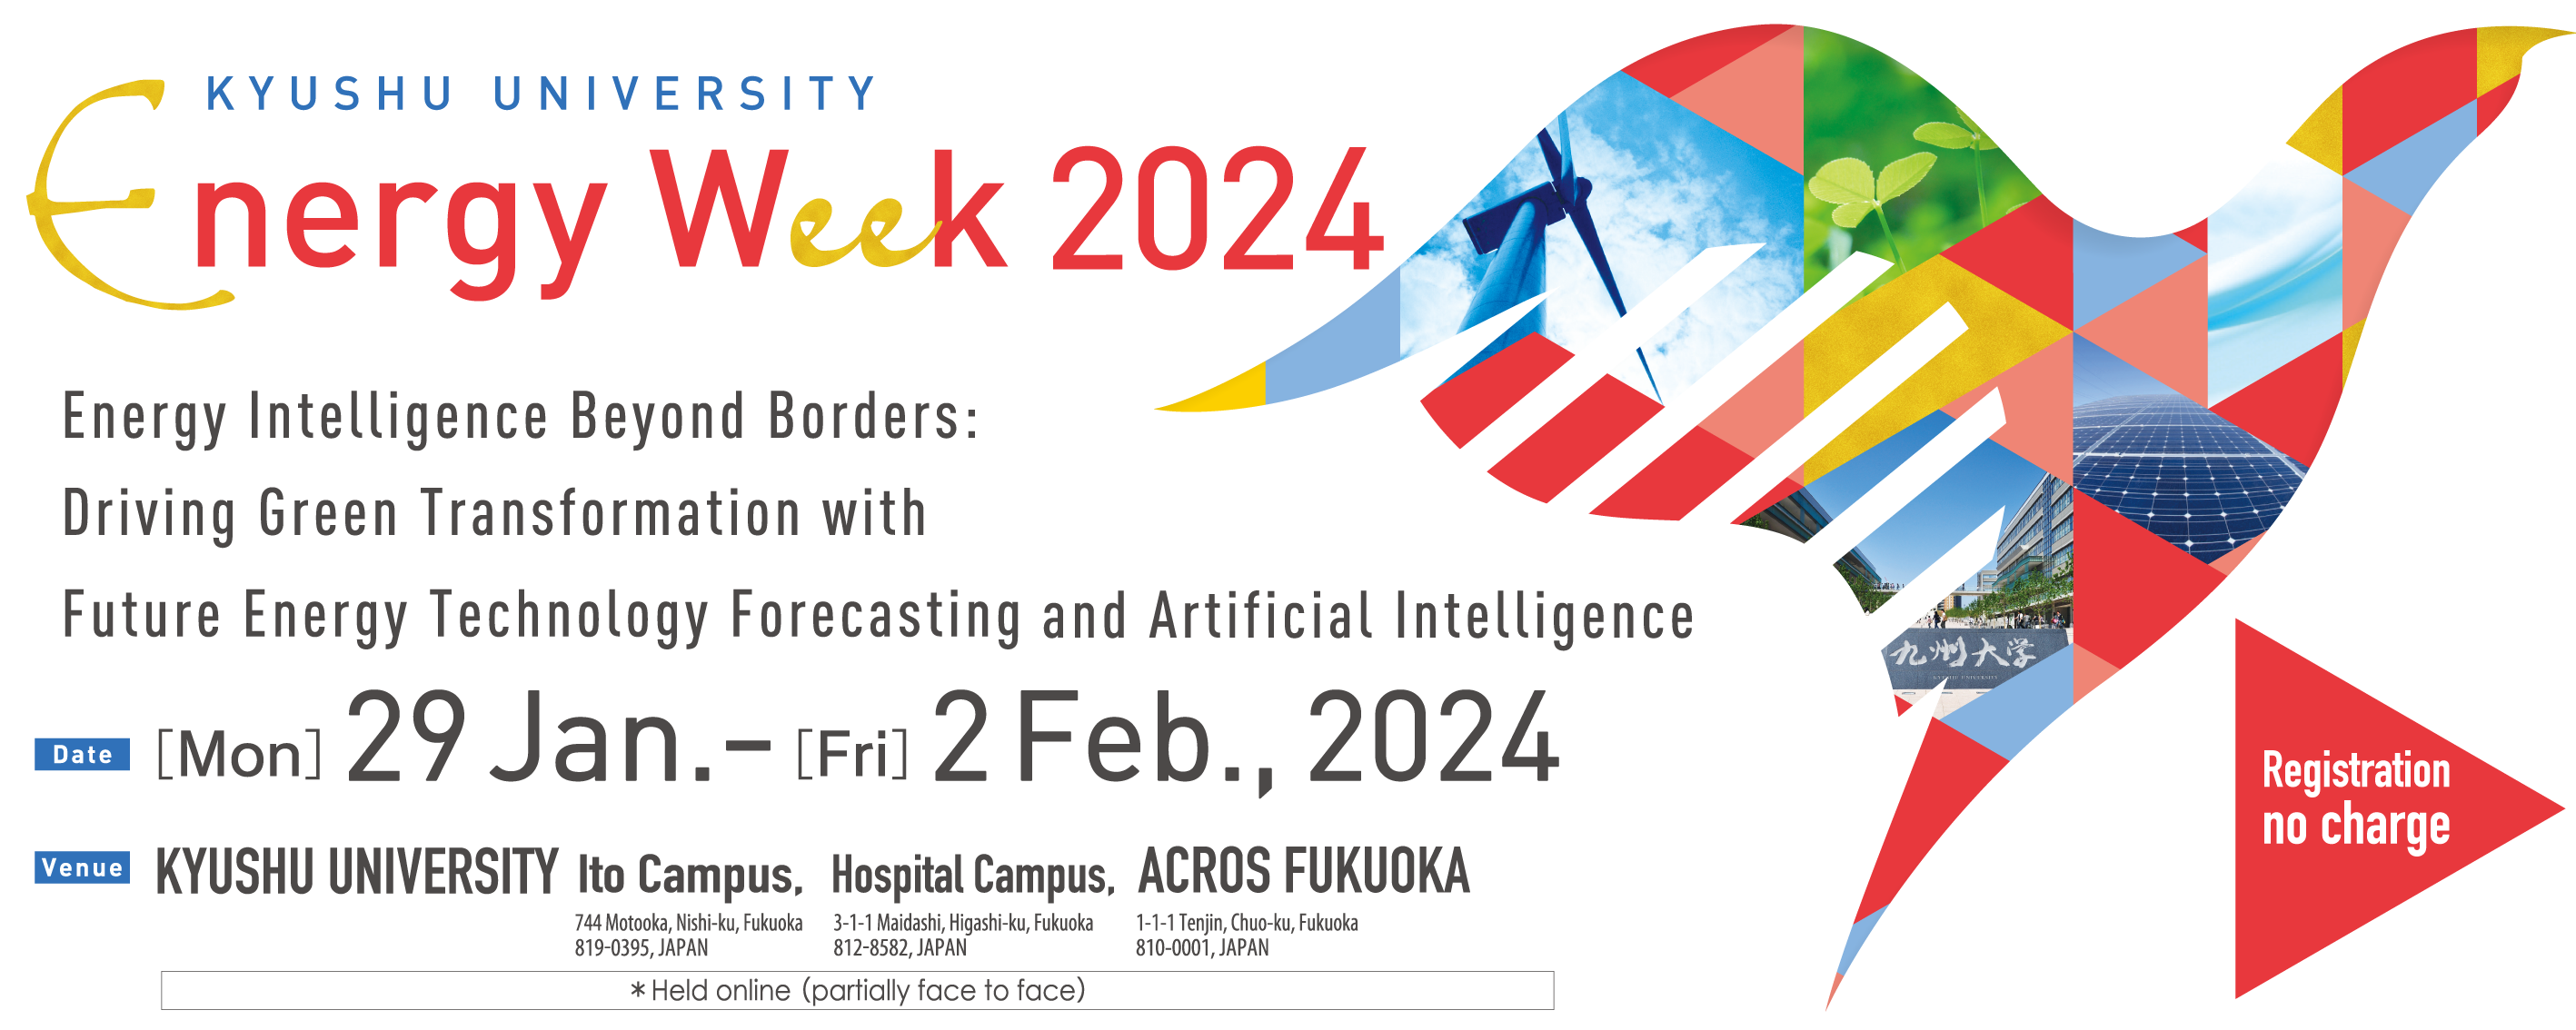 Kyushu University Energy Week 2024